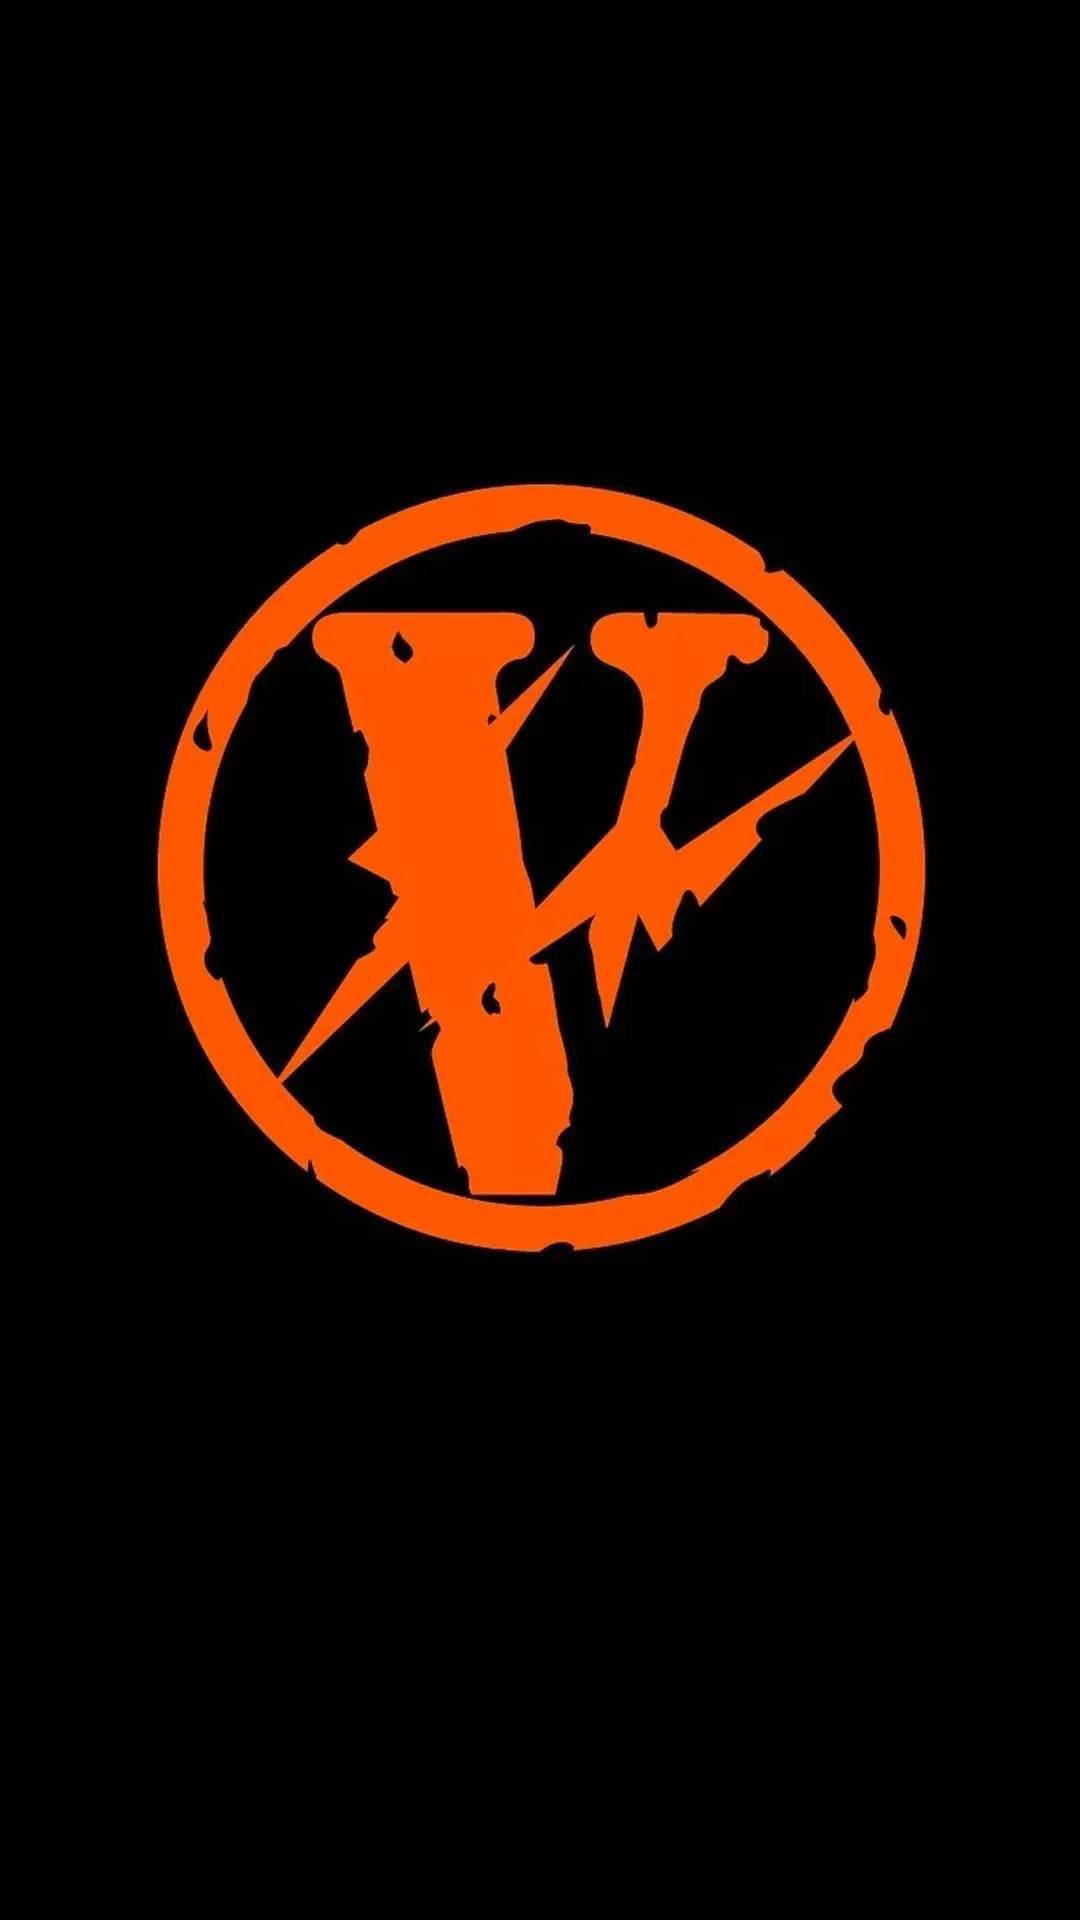 Orangekreis Logo Vlone Profilbild Wallpaper